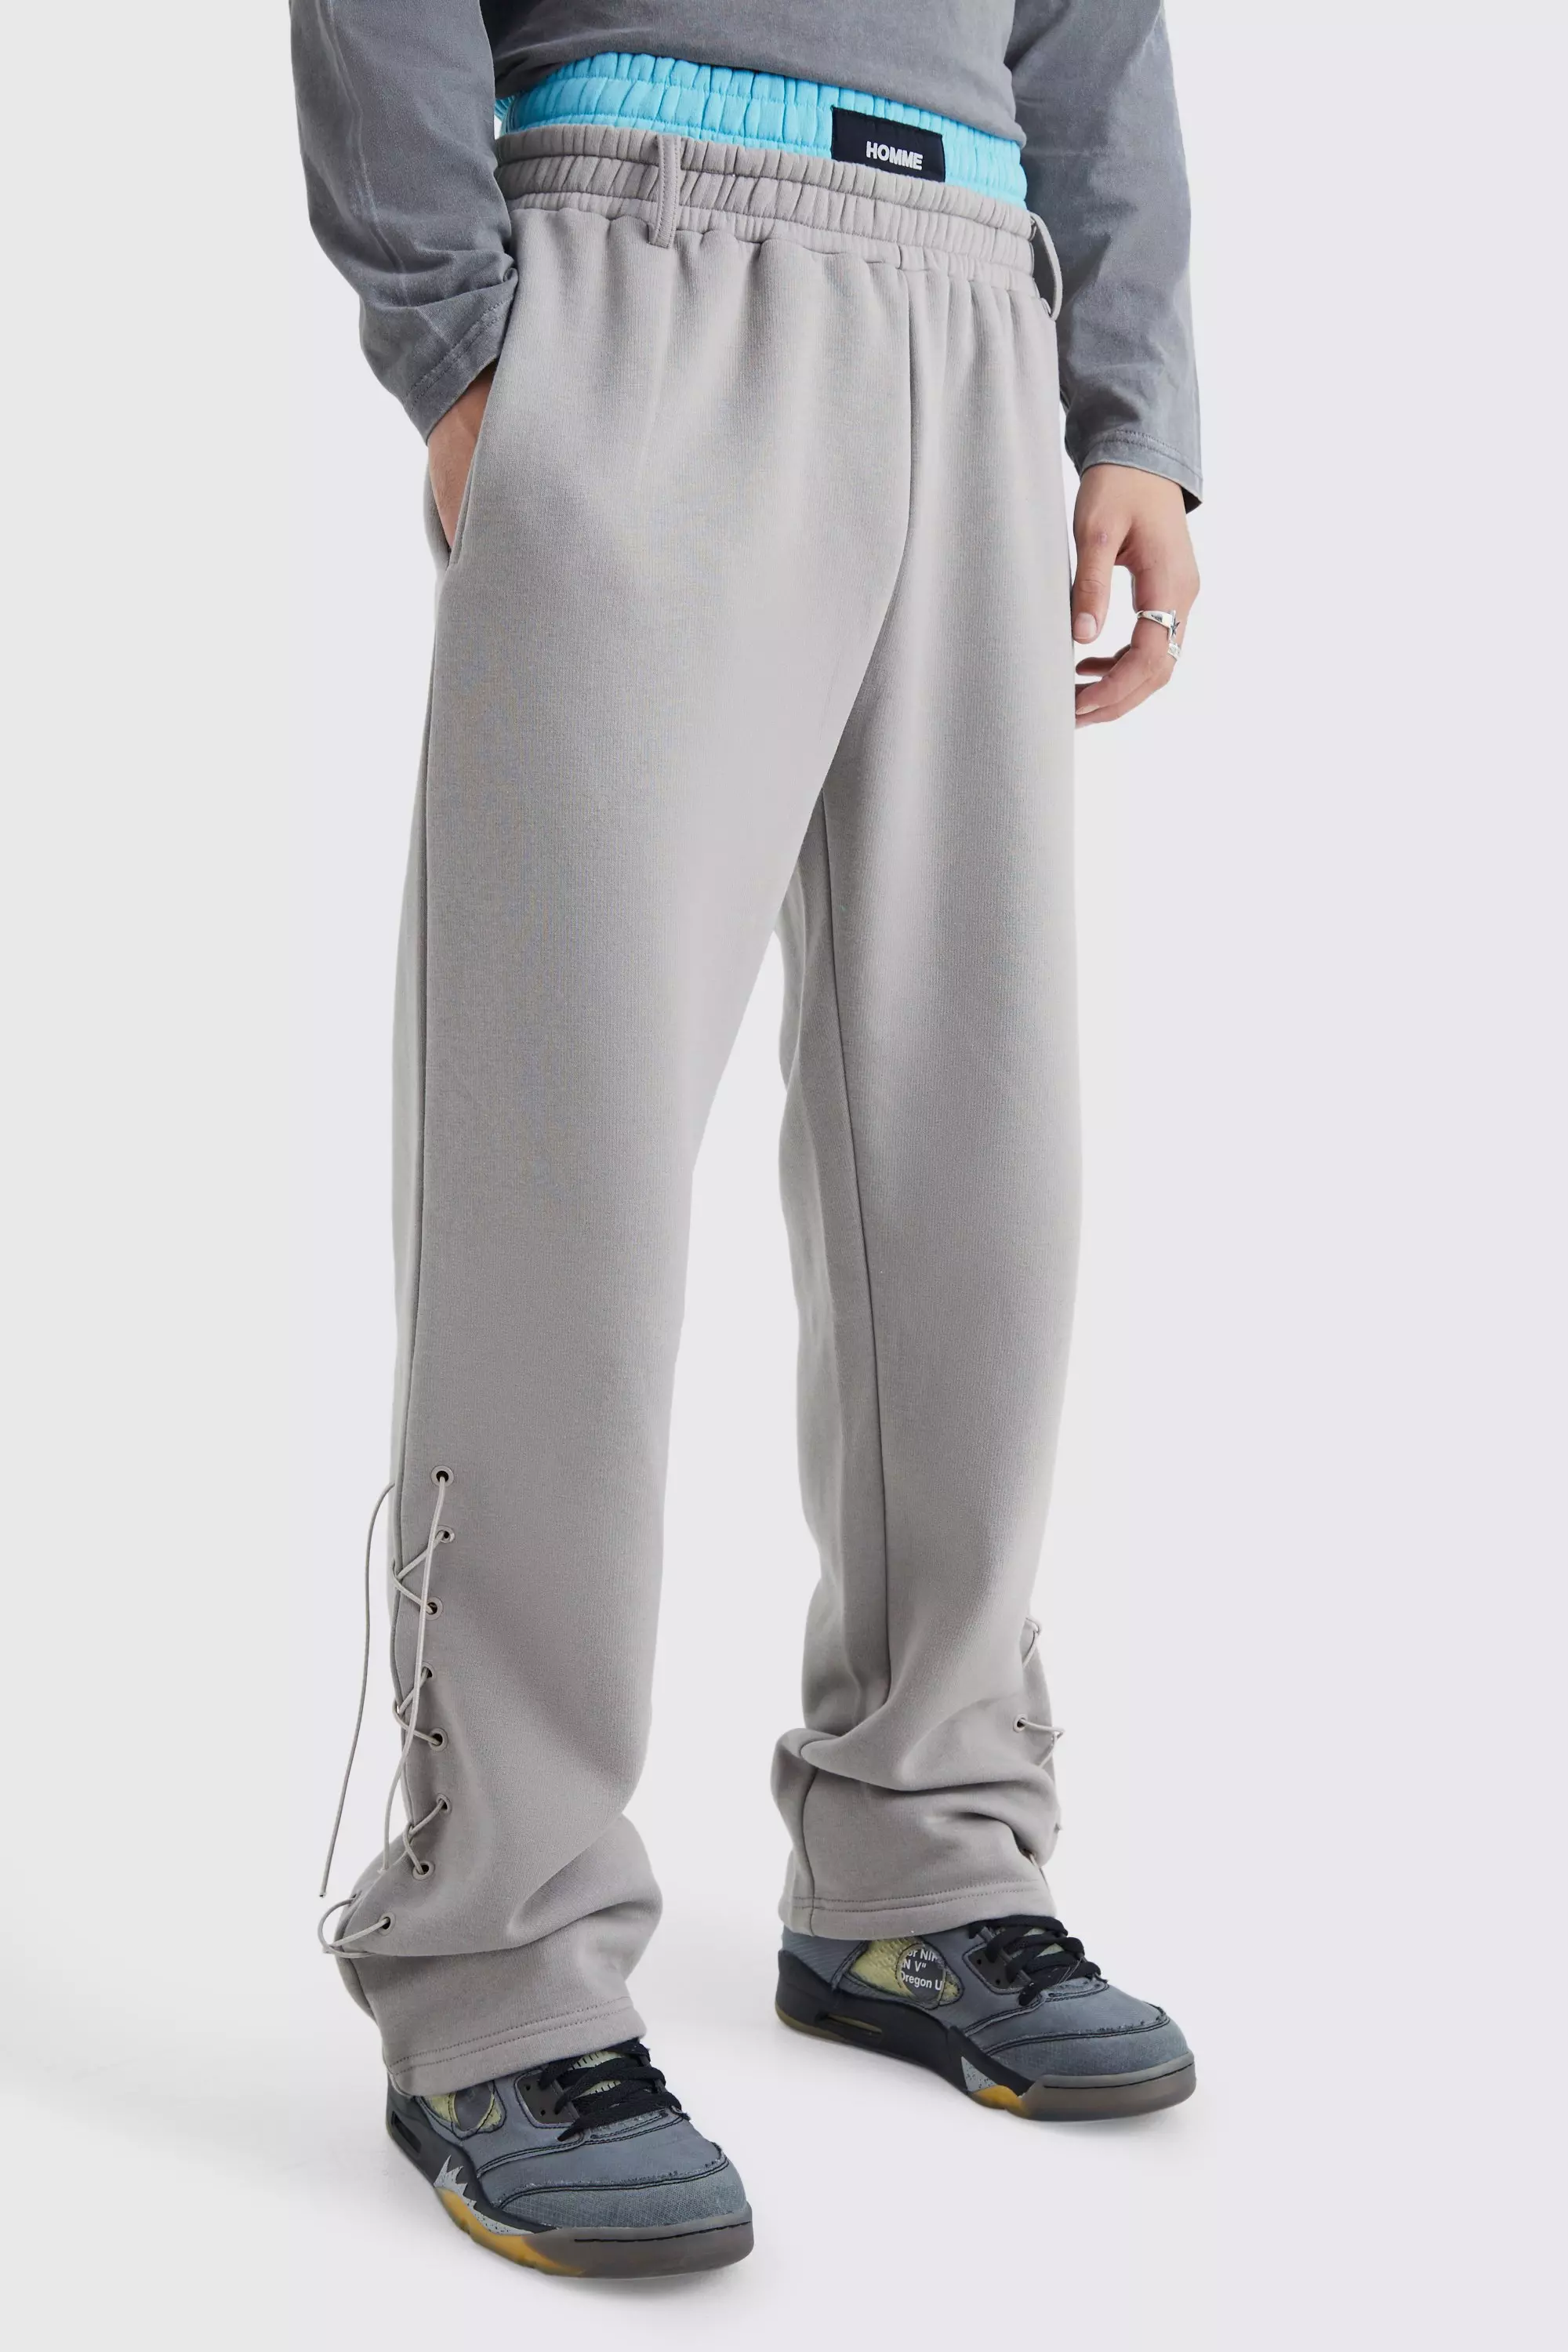  Cathalem Grey Sweatpants Men Men's Sweatpants with